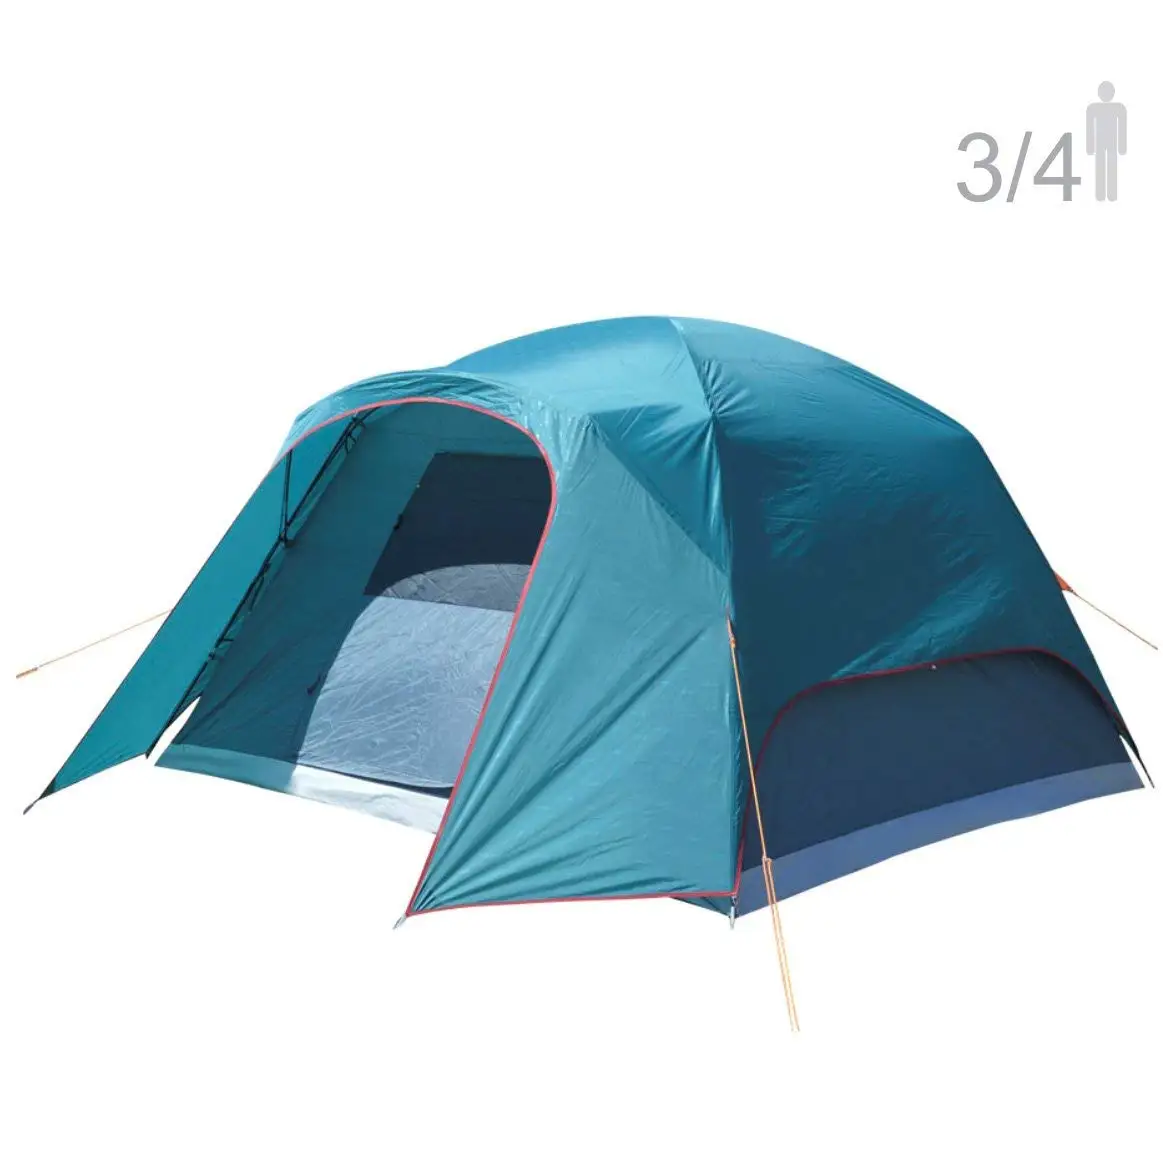 NTK Cherokee Gt 2 To 3 Person 7 By 5 Foot Sport Camping Dome Tent 100/% Waterproof 1200Mm Dark Teal